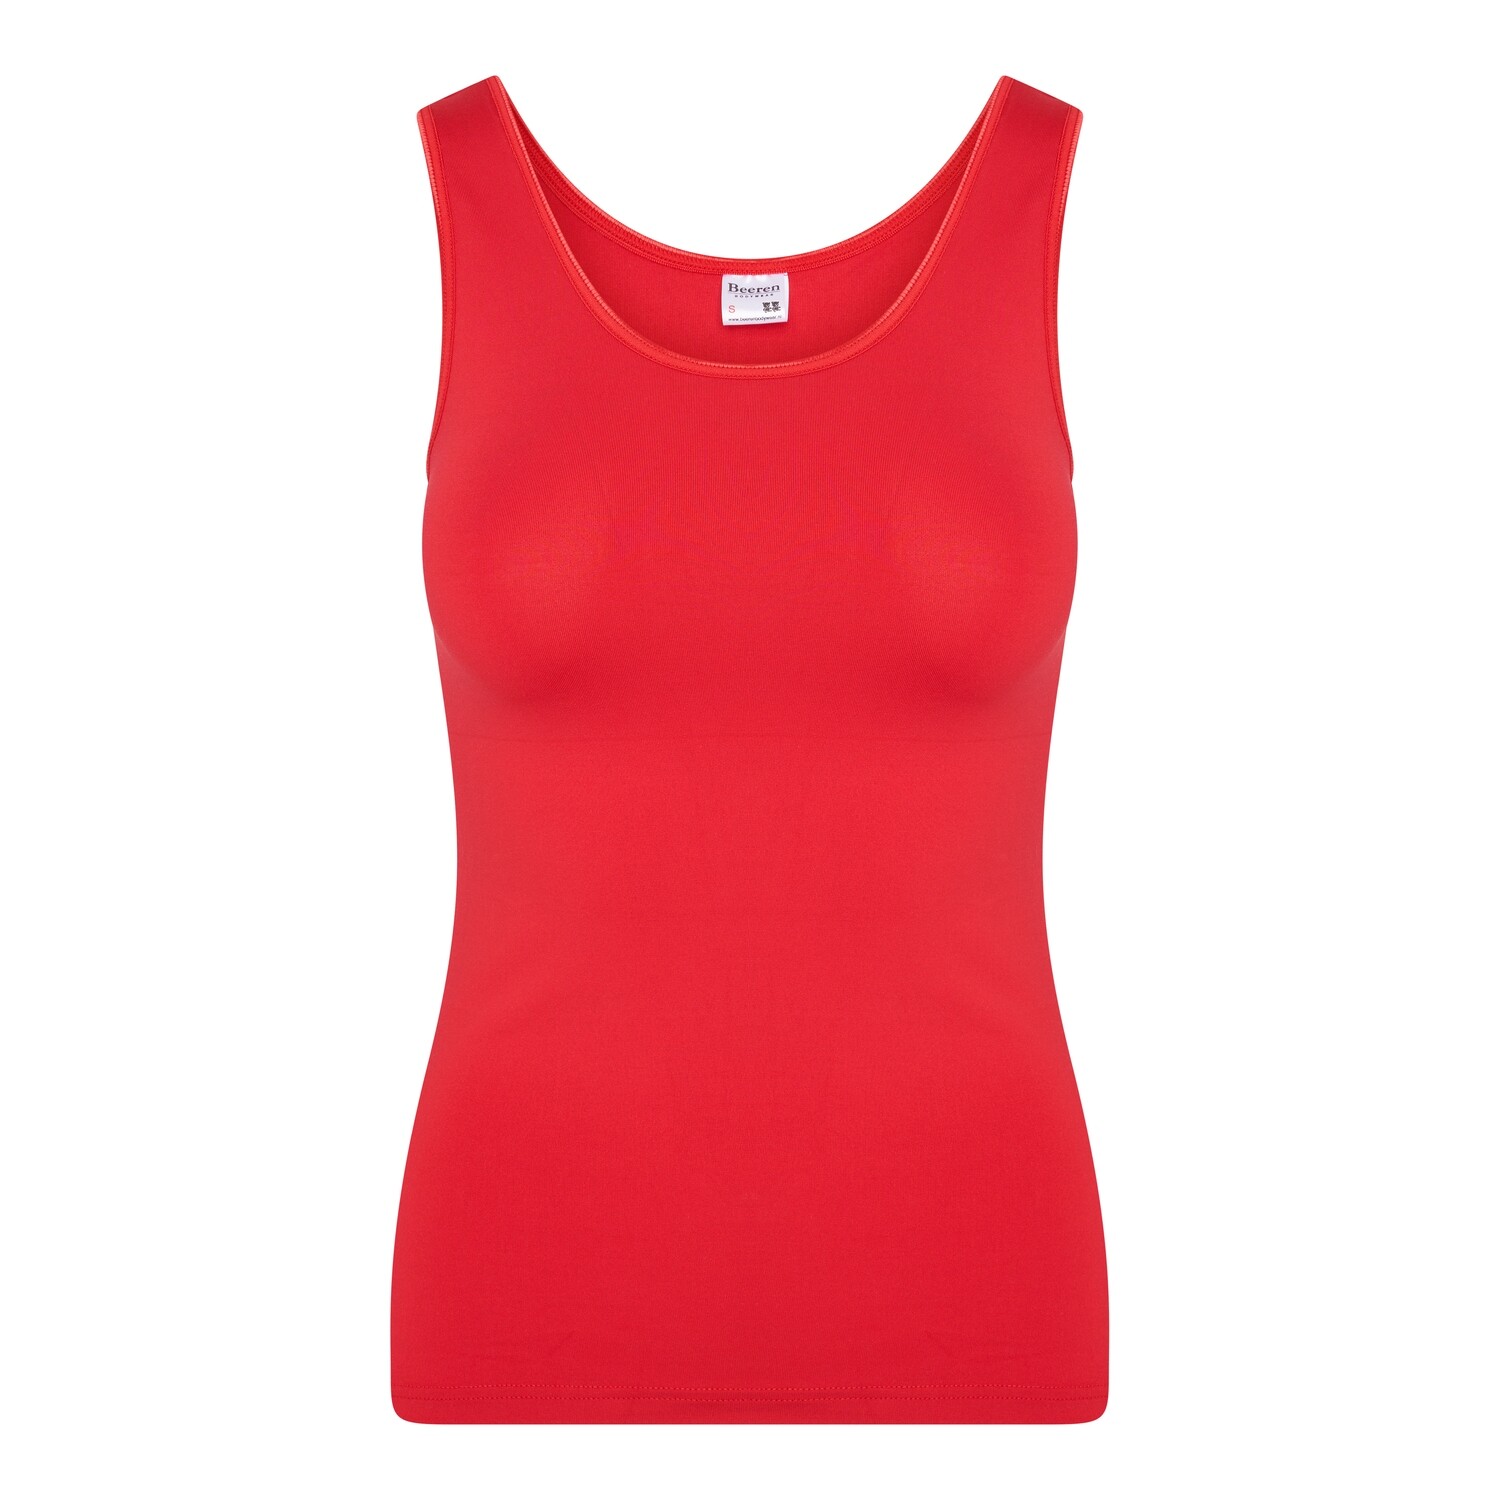 (07-528) Dames hemd Elegance rood XL